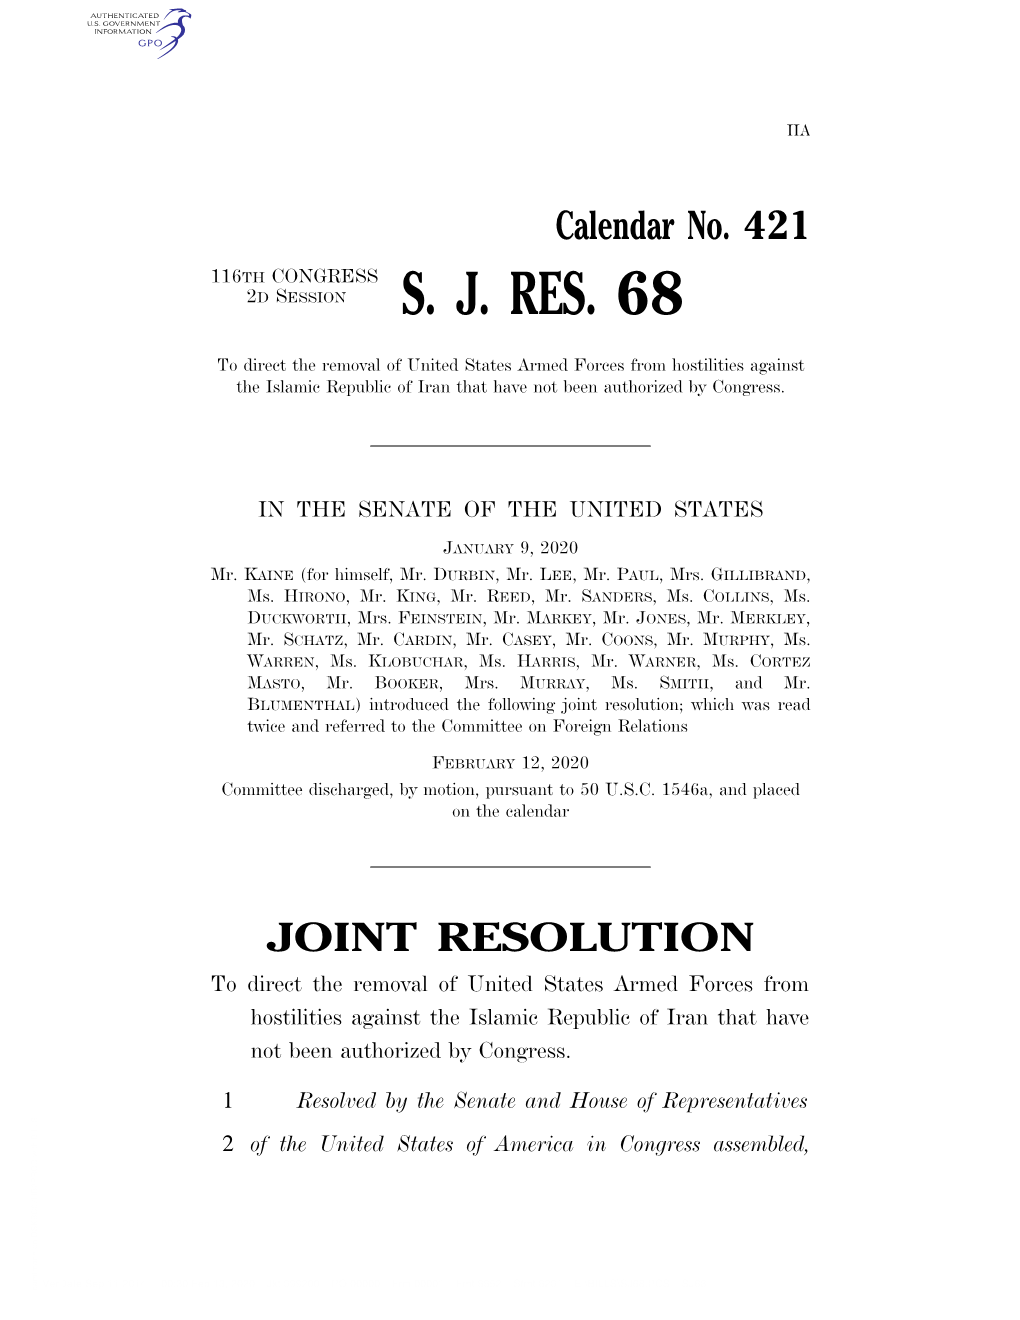 War Powers Resolution 24 (50 U.S.C